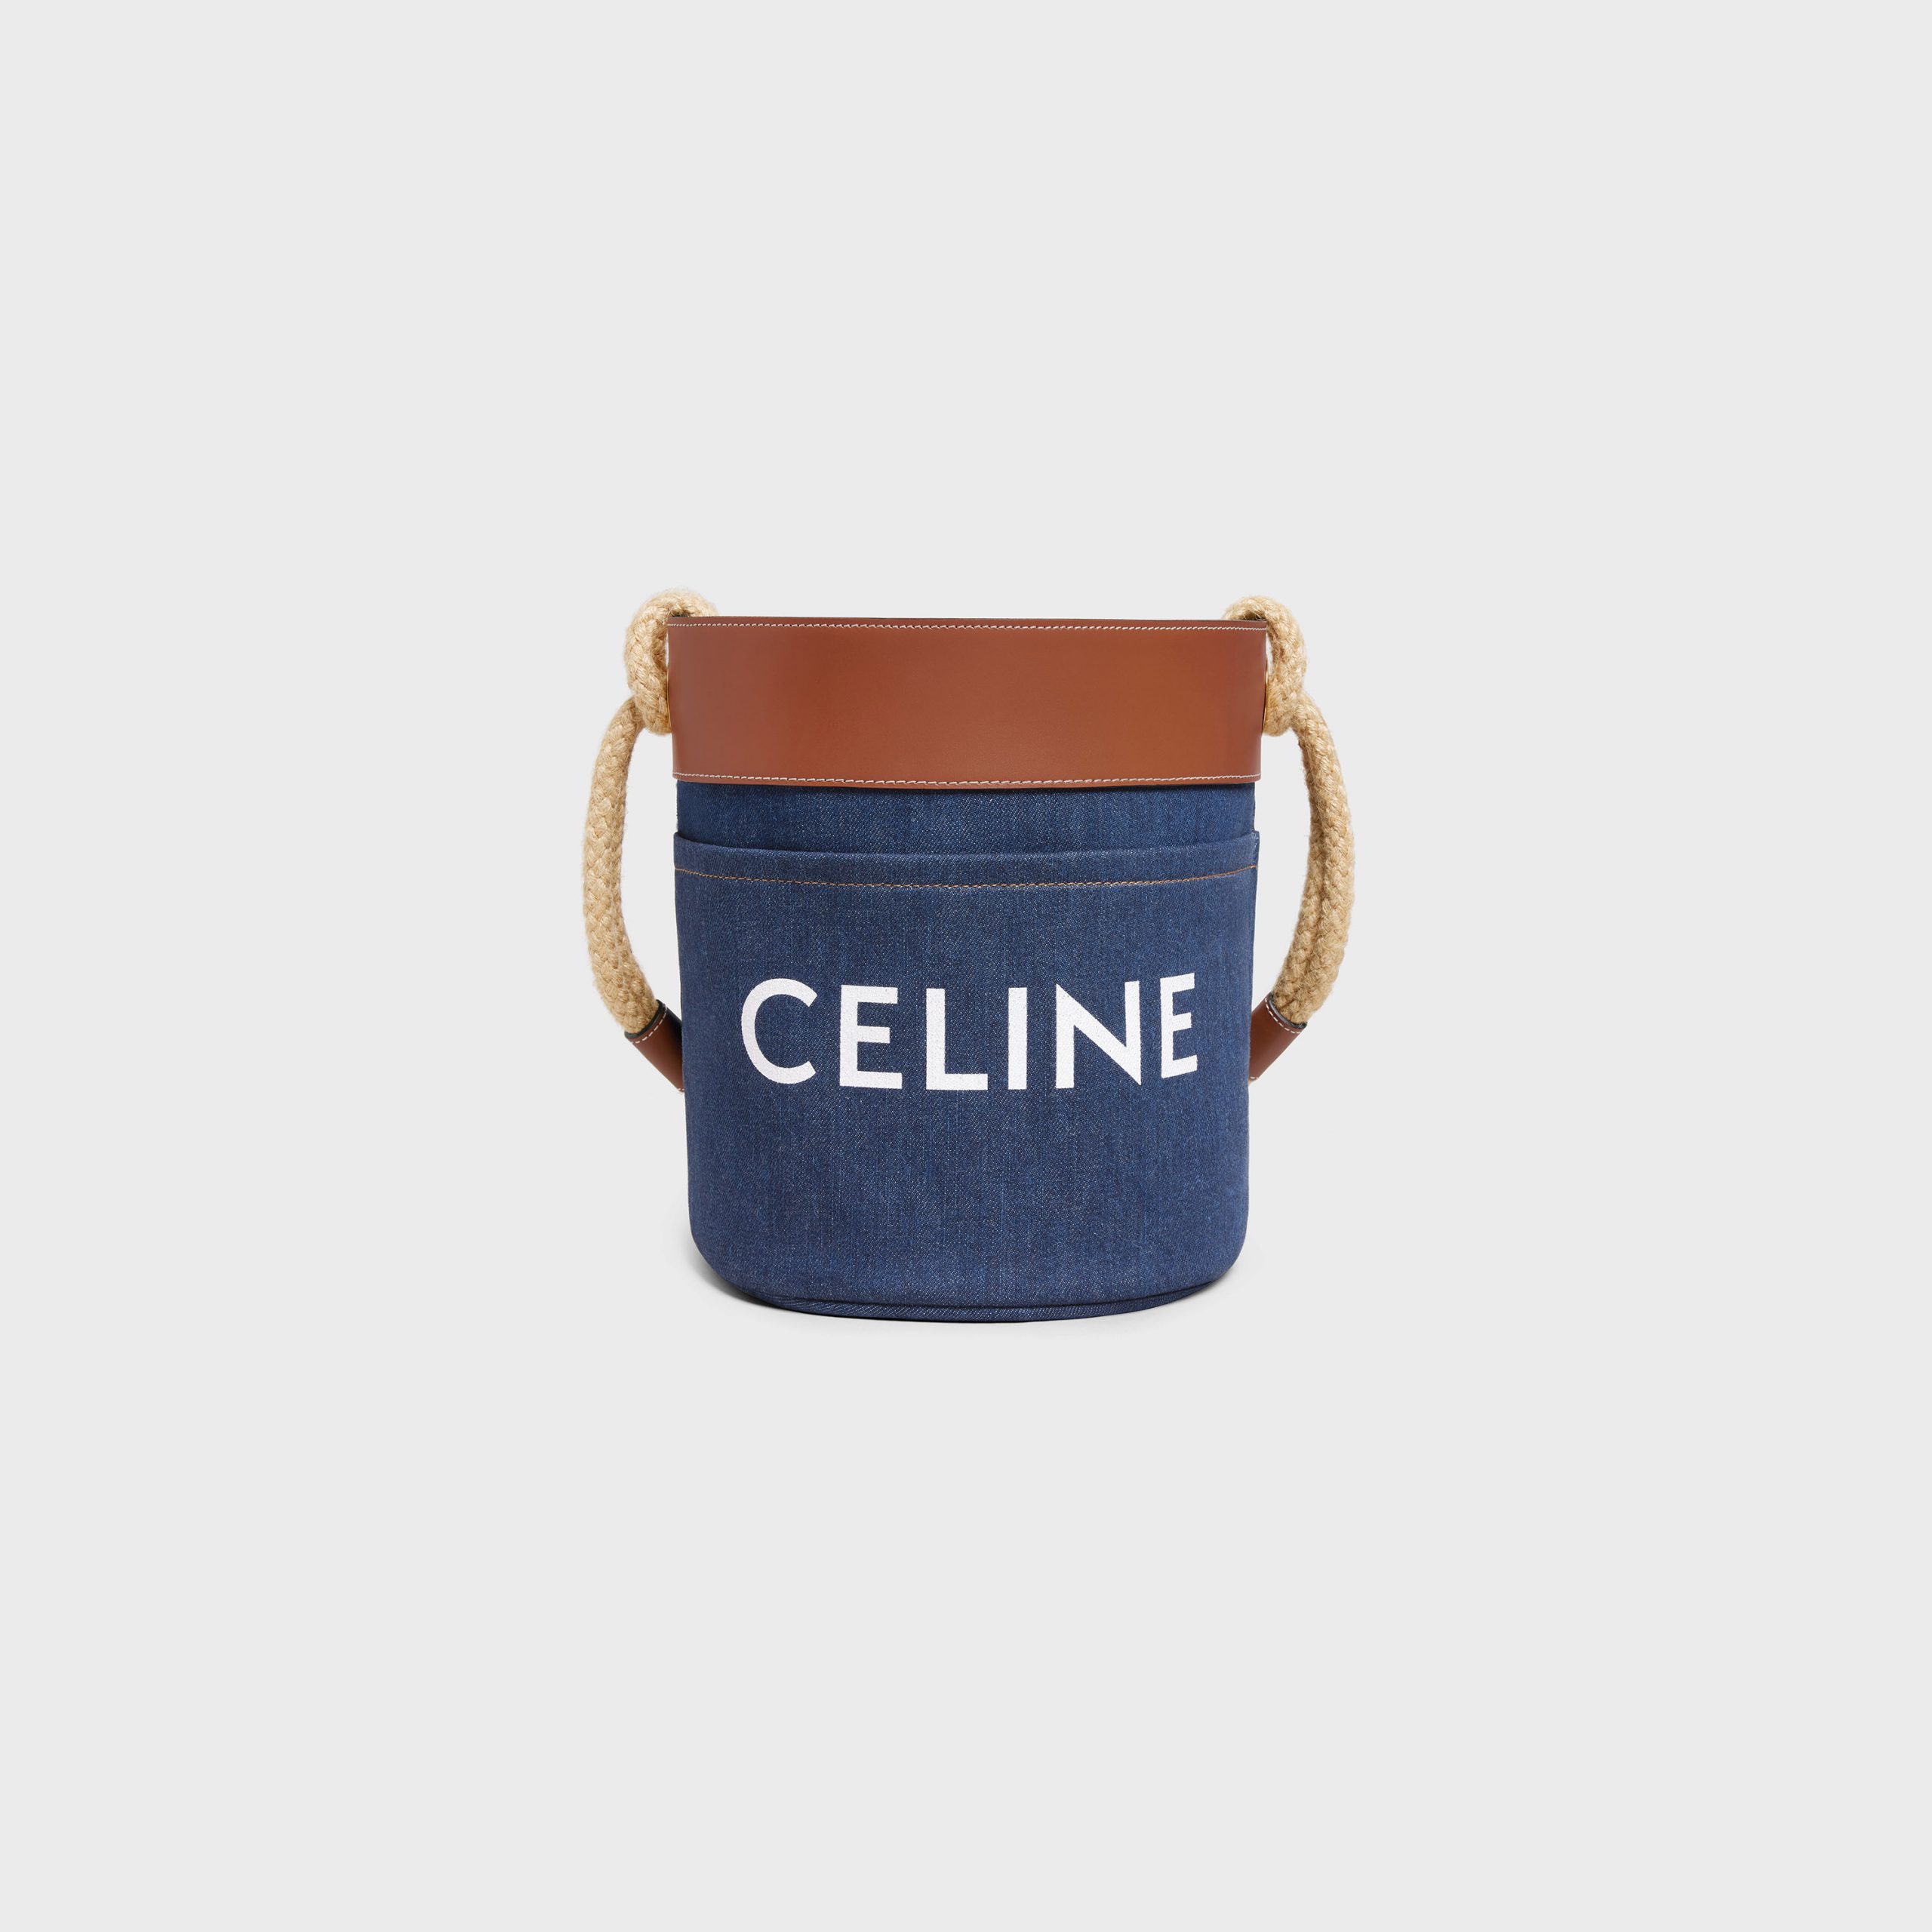 Celine Bucket Celine In Denim With Celine Print And Calfskin – Navy / Tan – 196272DJD.07AT